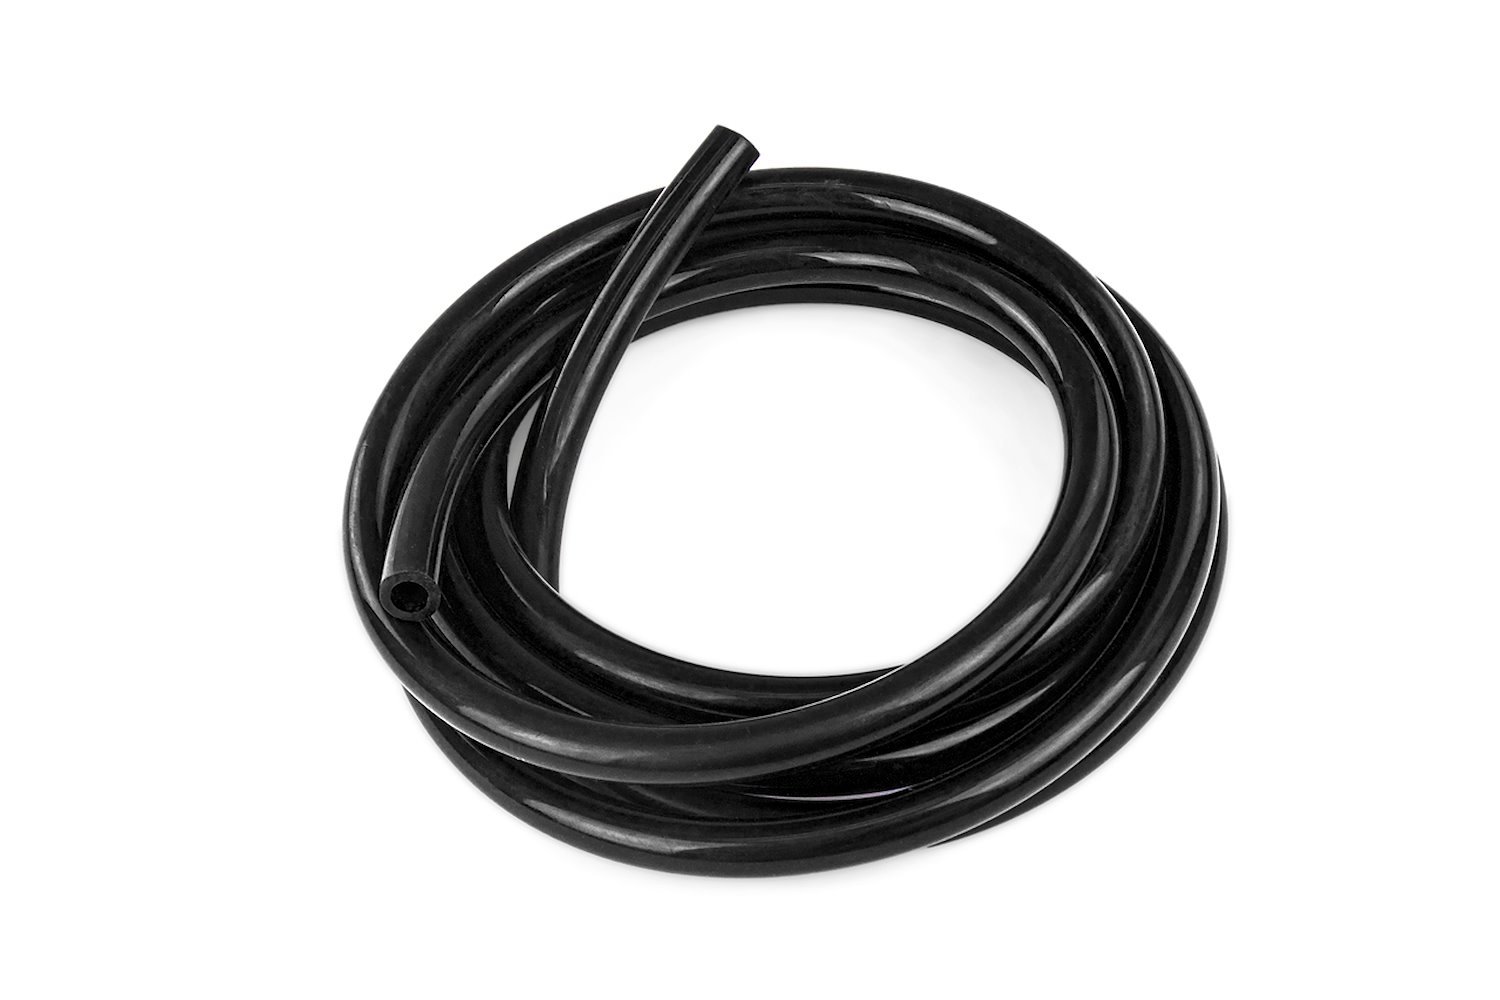 HTSVH2-BLKx10 High-Temperature Silicone Vacuum Hose Tubing, 5/64 in. ID, 10 ft. Roll, Black